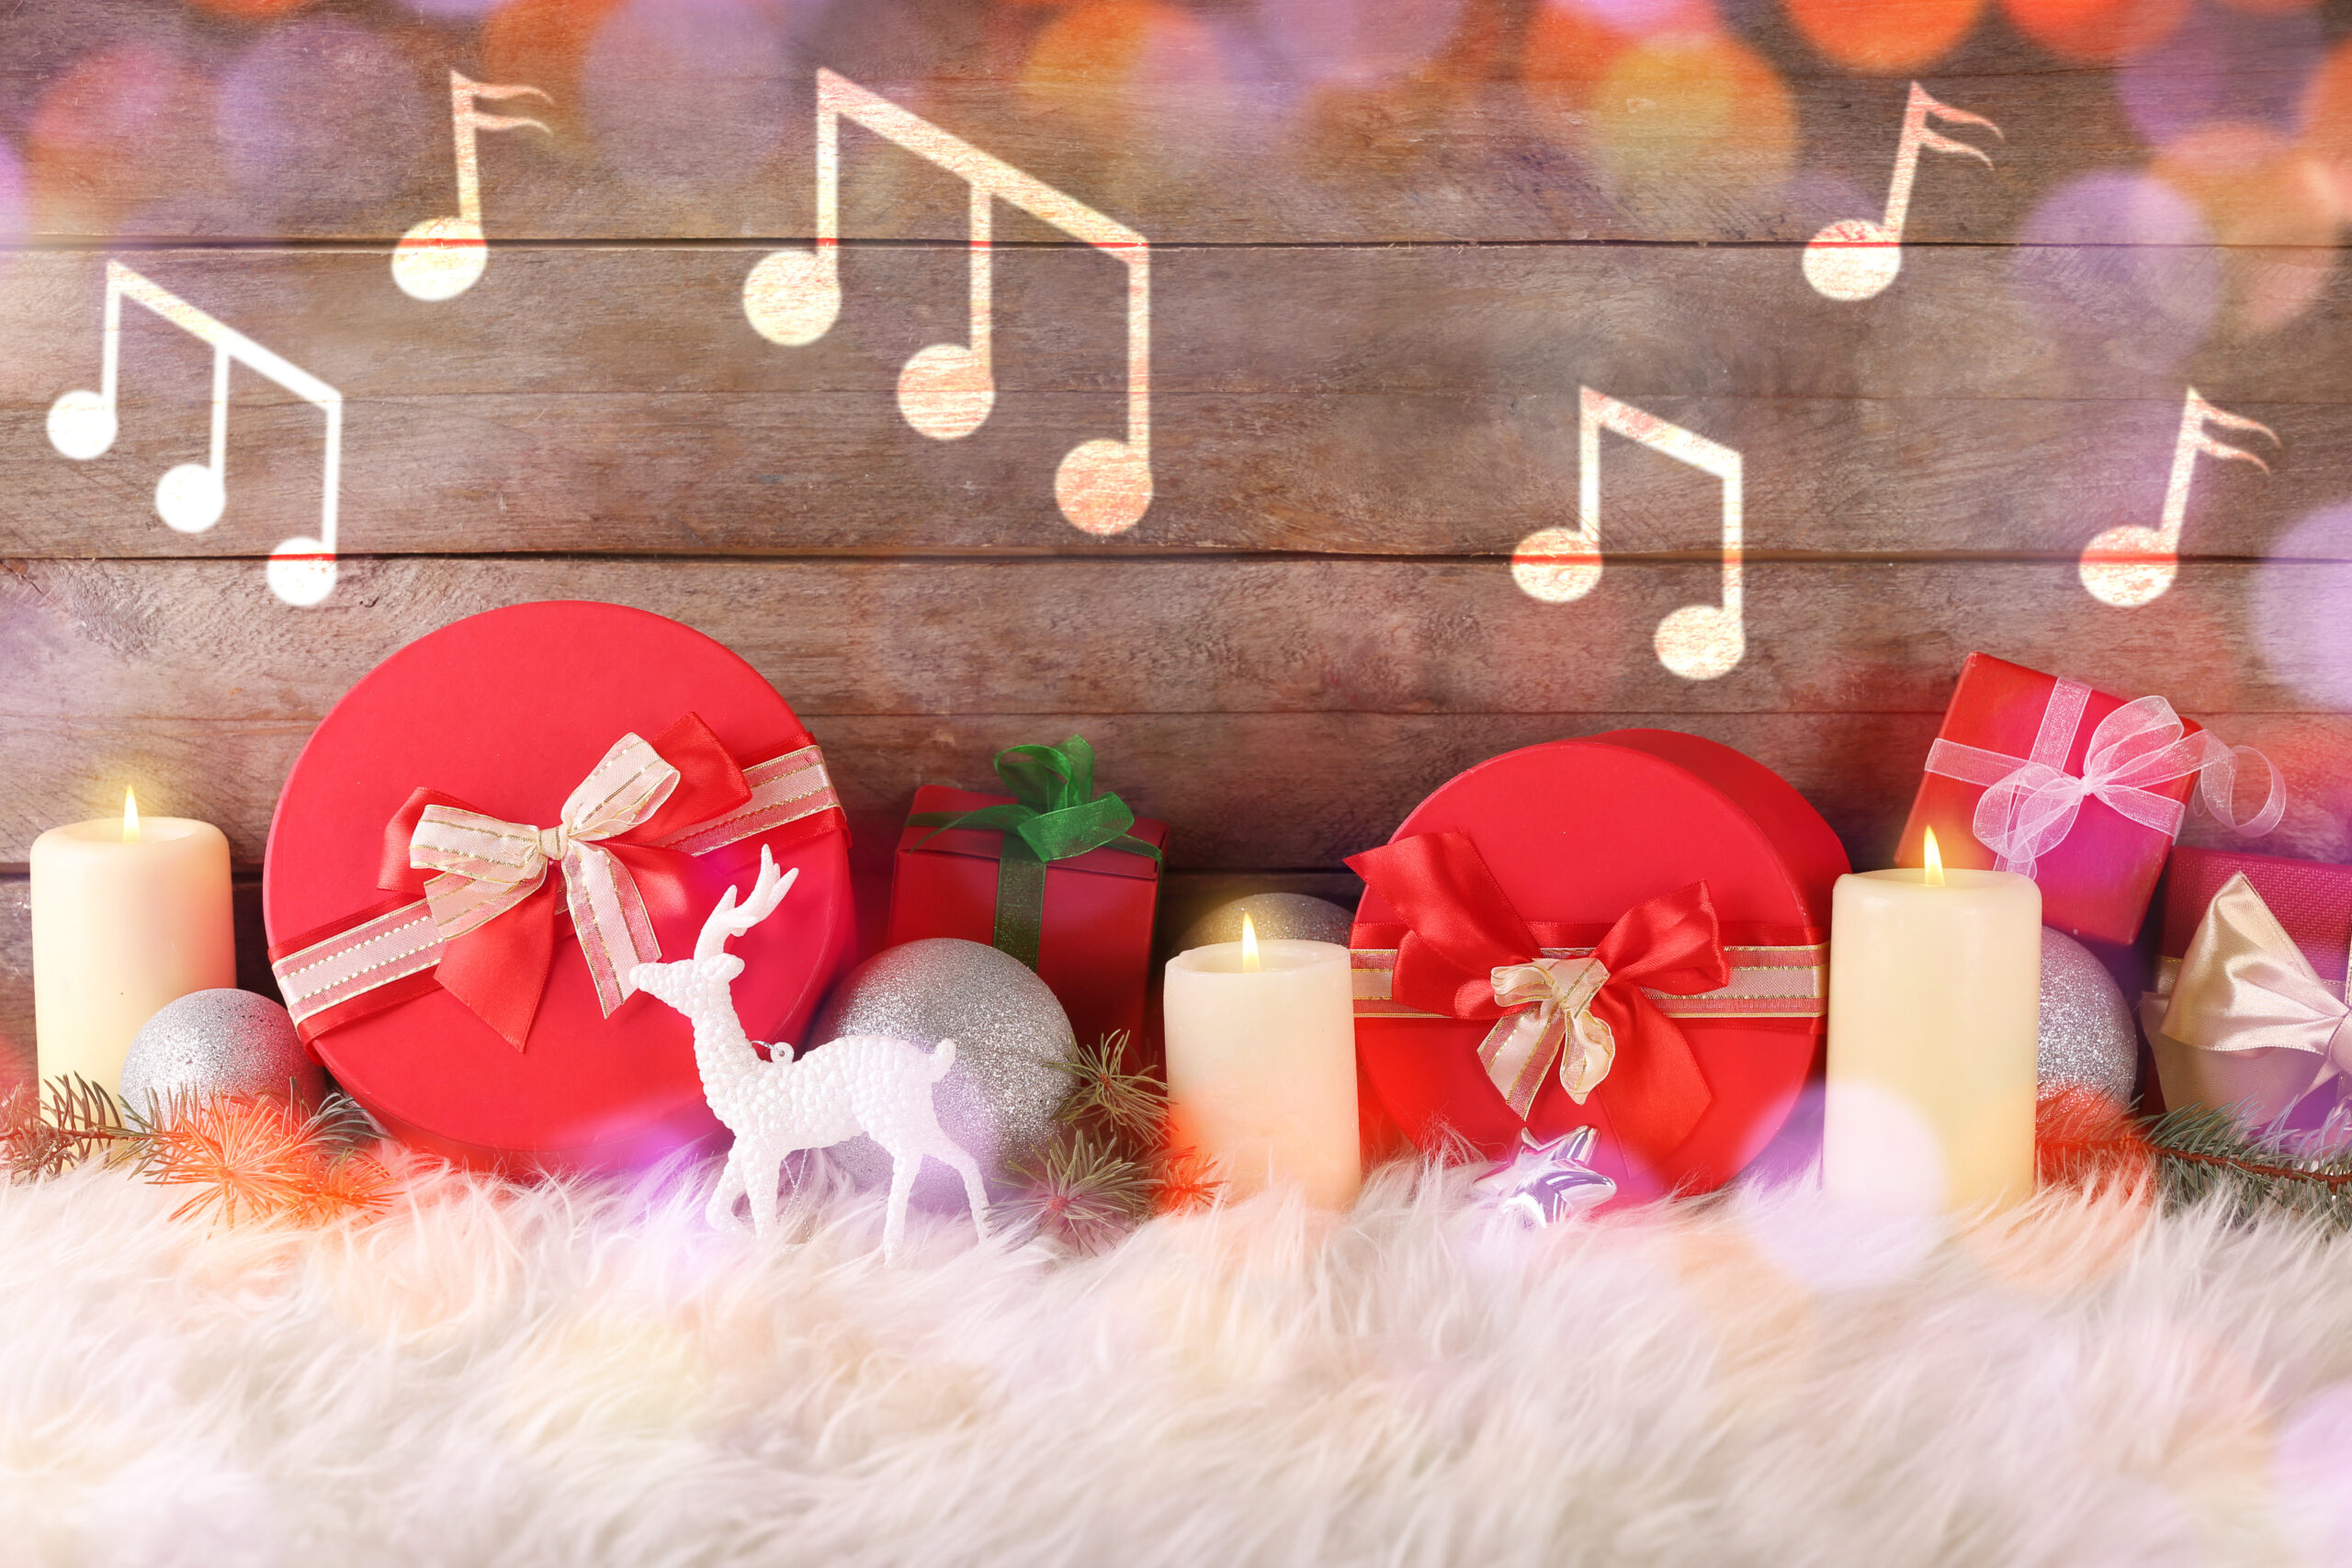 Holiday Songs that Make the Season Bright